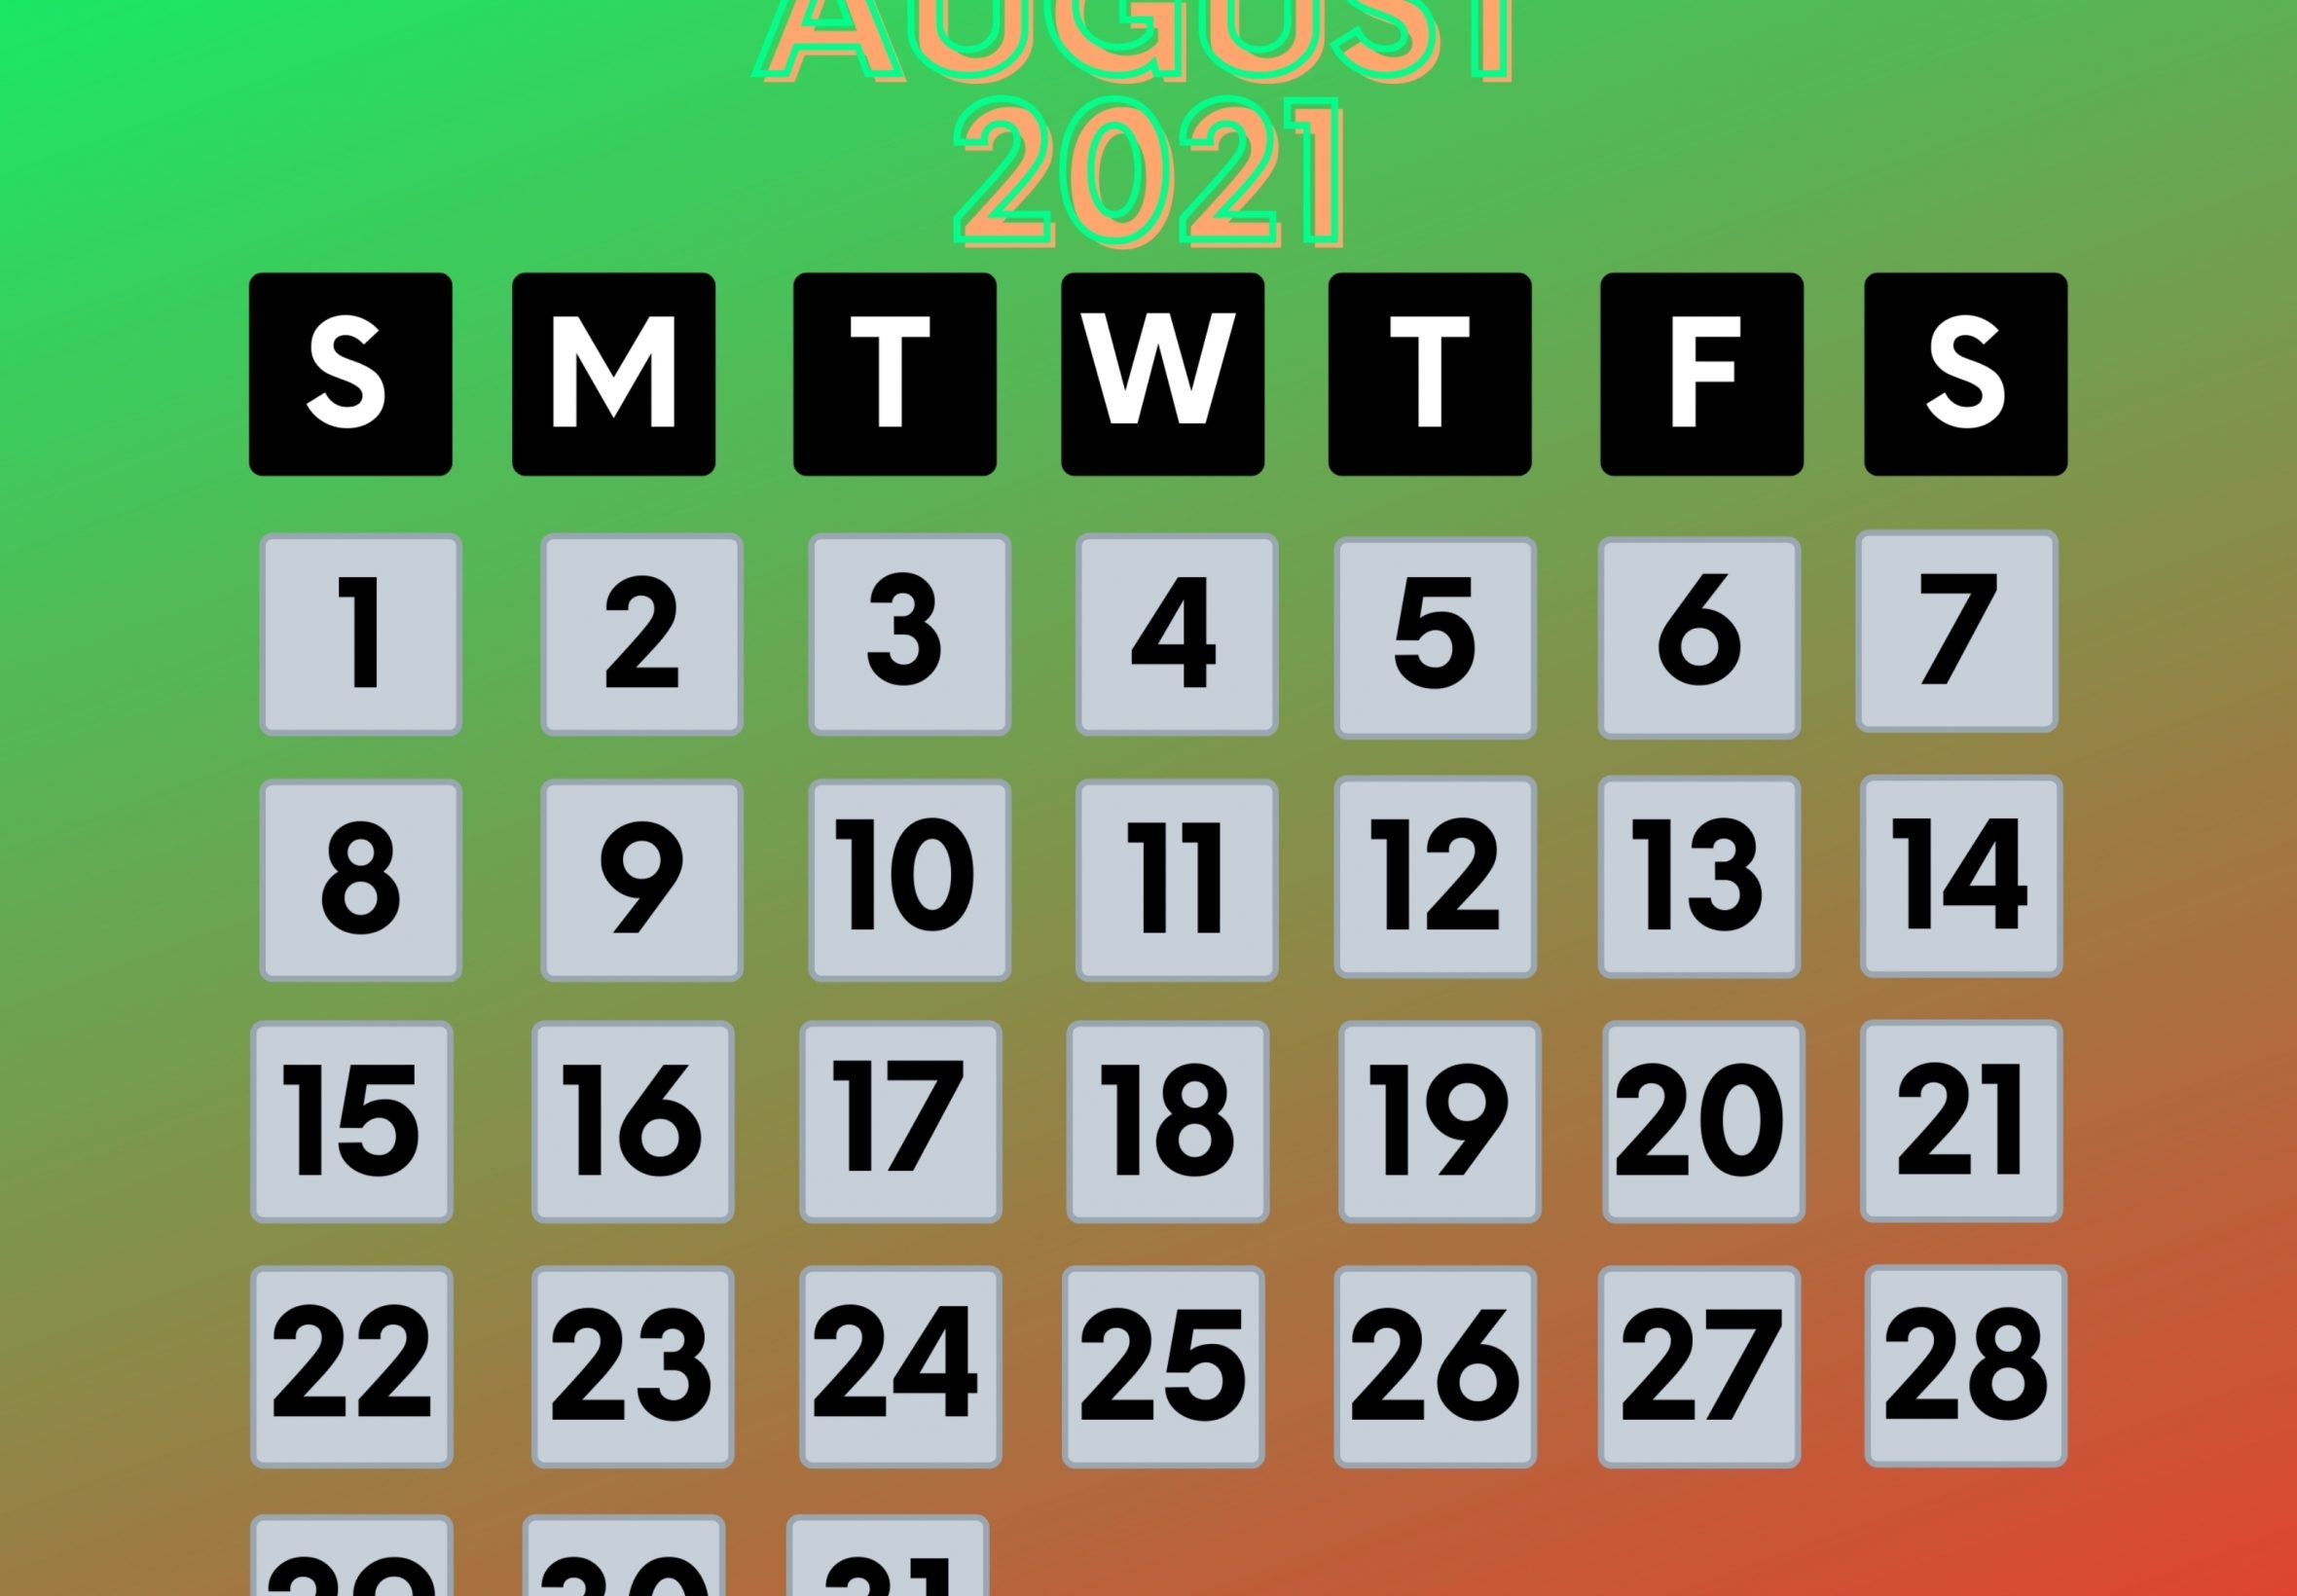 2360x1640 iPad Air wallpaper 4k August 2021 Calendar iPad Wallpaper 2360x1640 pixels resolution